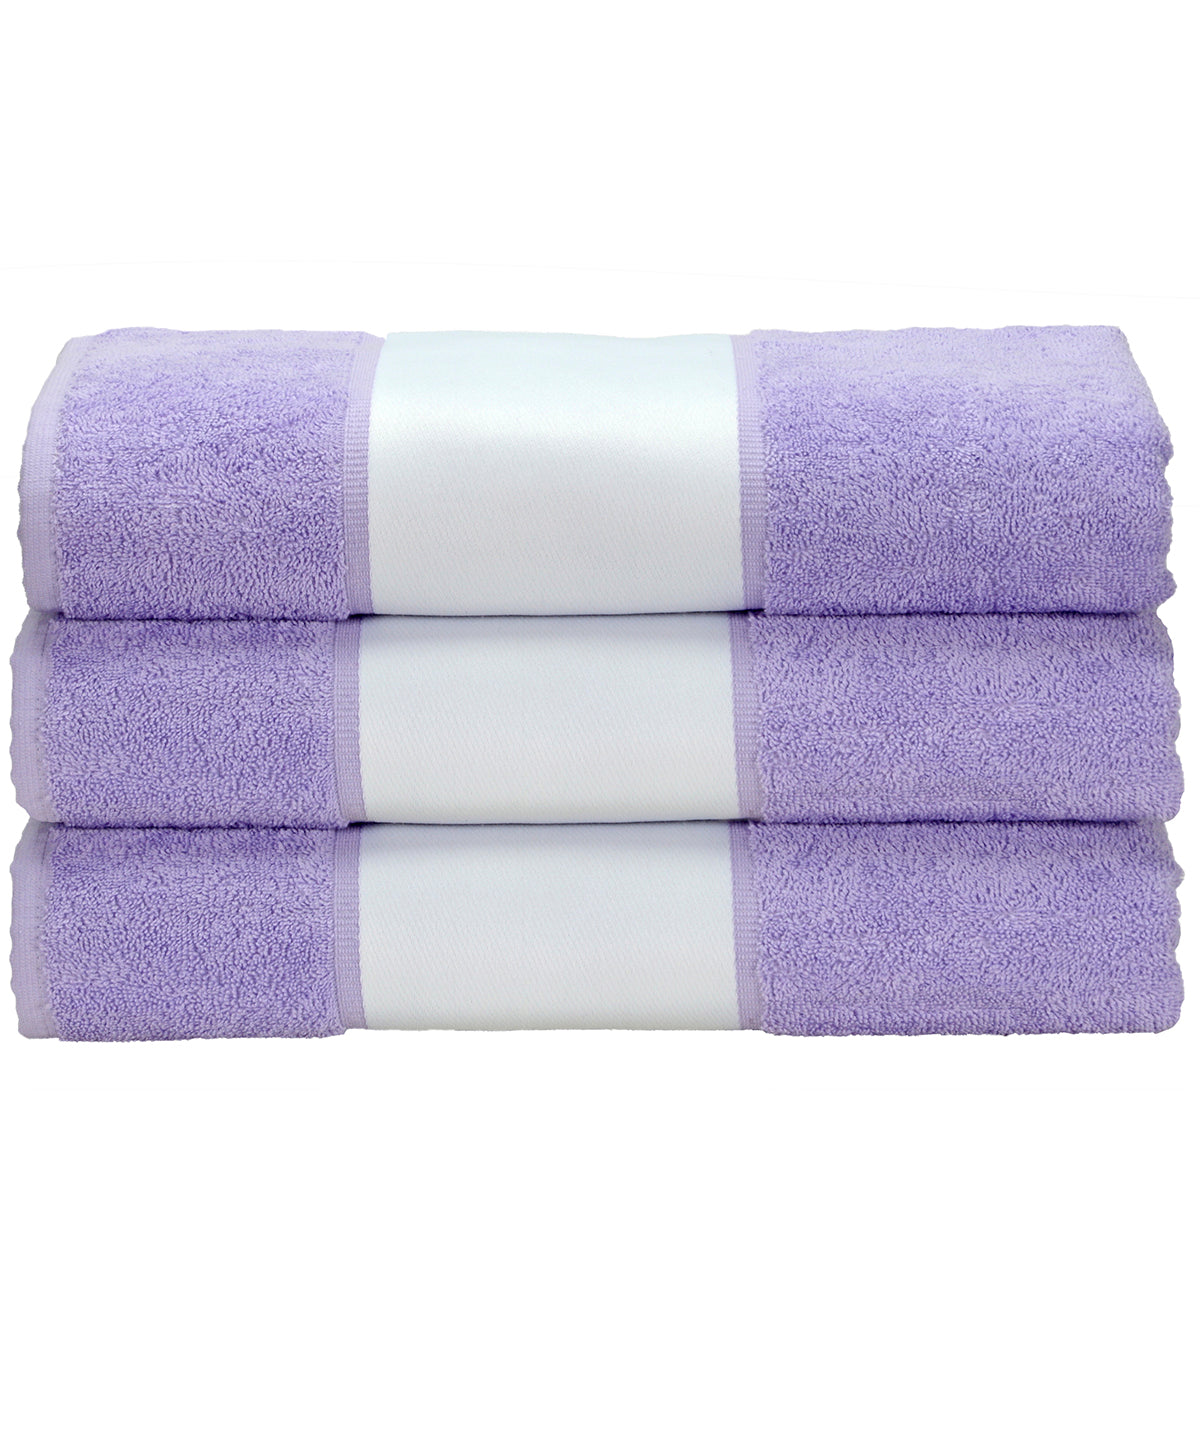 Personalised Towels - Light Purple A&R Towels ARTG® SUBLI-Me® hand towel